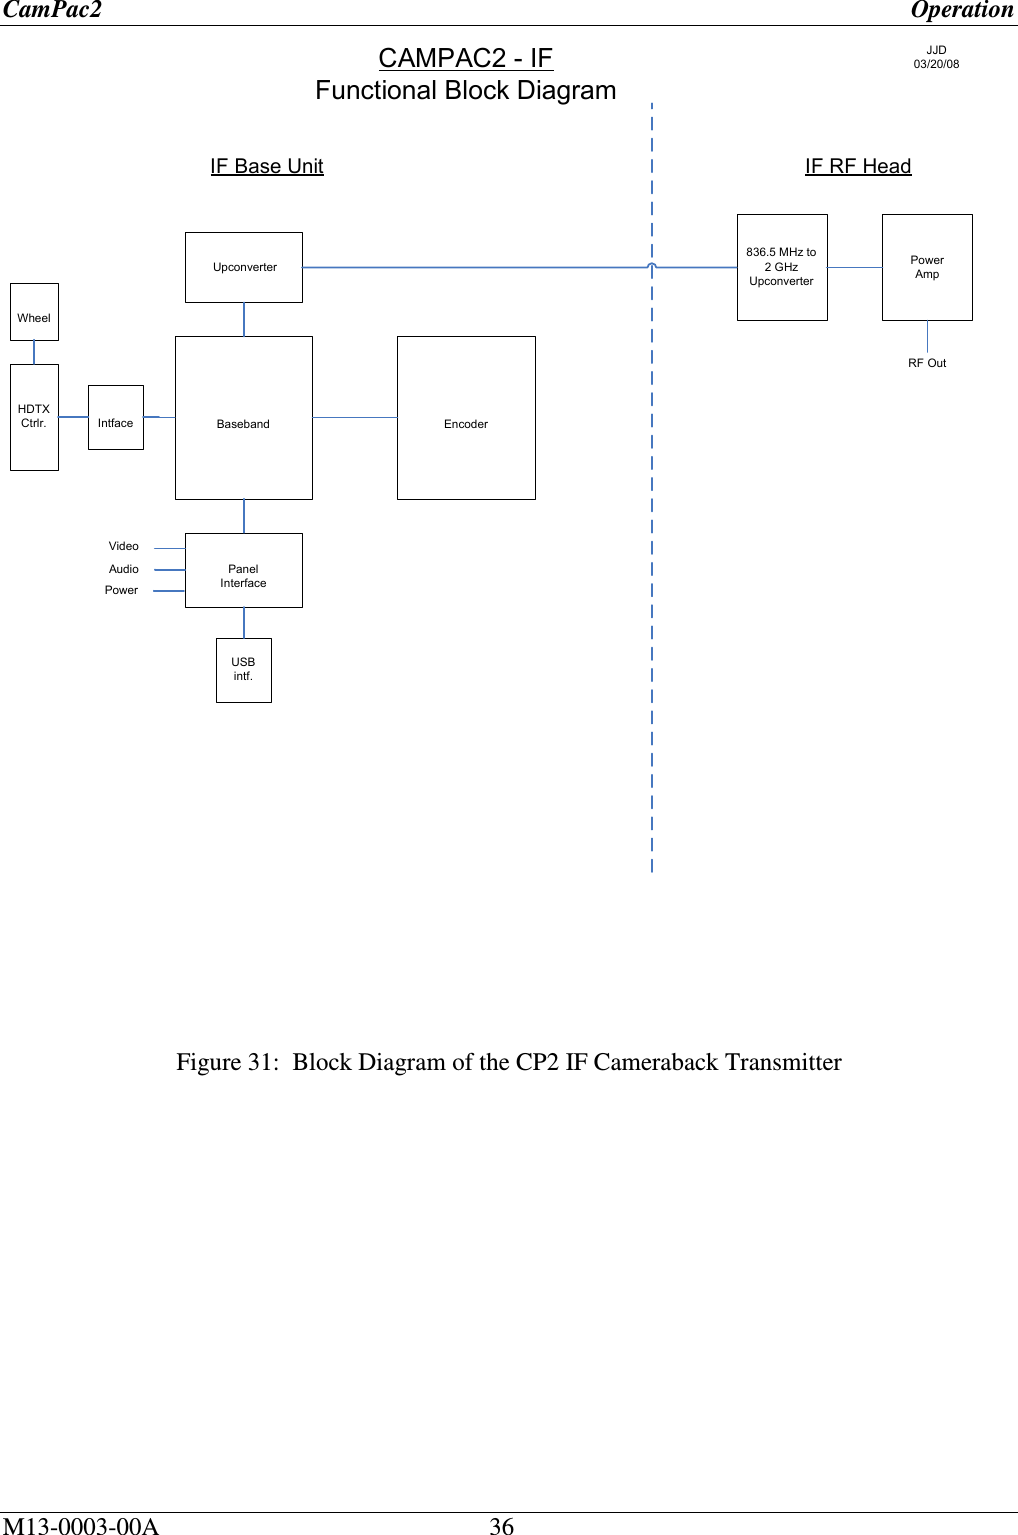 CamPac2      Operation M13-0003-00A     36  UpconverterBaseband Intface836.5 MHz to 2 GHz UpconverterHDTXCtrlr.WheelPanel InterfaceUSB intf.EncoderVideoAudioPowerPower AmpRF OutIF Base Unit IF RF HeadCAMPAC2 - IFFunctional Block DiagramJJD 03/20/08        Figure 31:  Block Diagram of the CP2 IF Cameraback Transmitter               